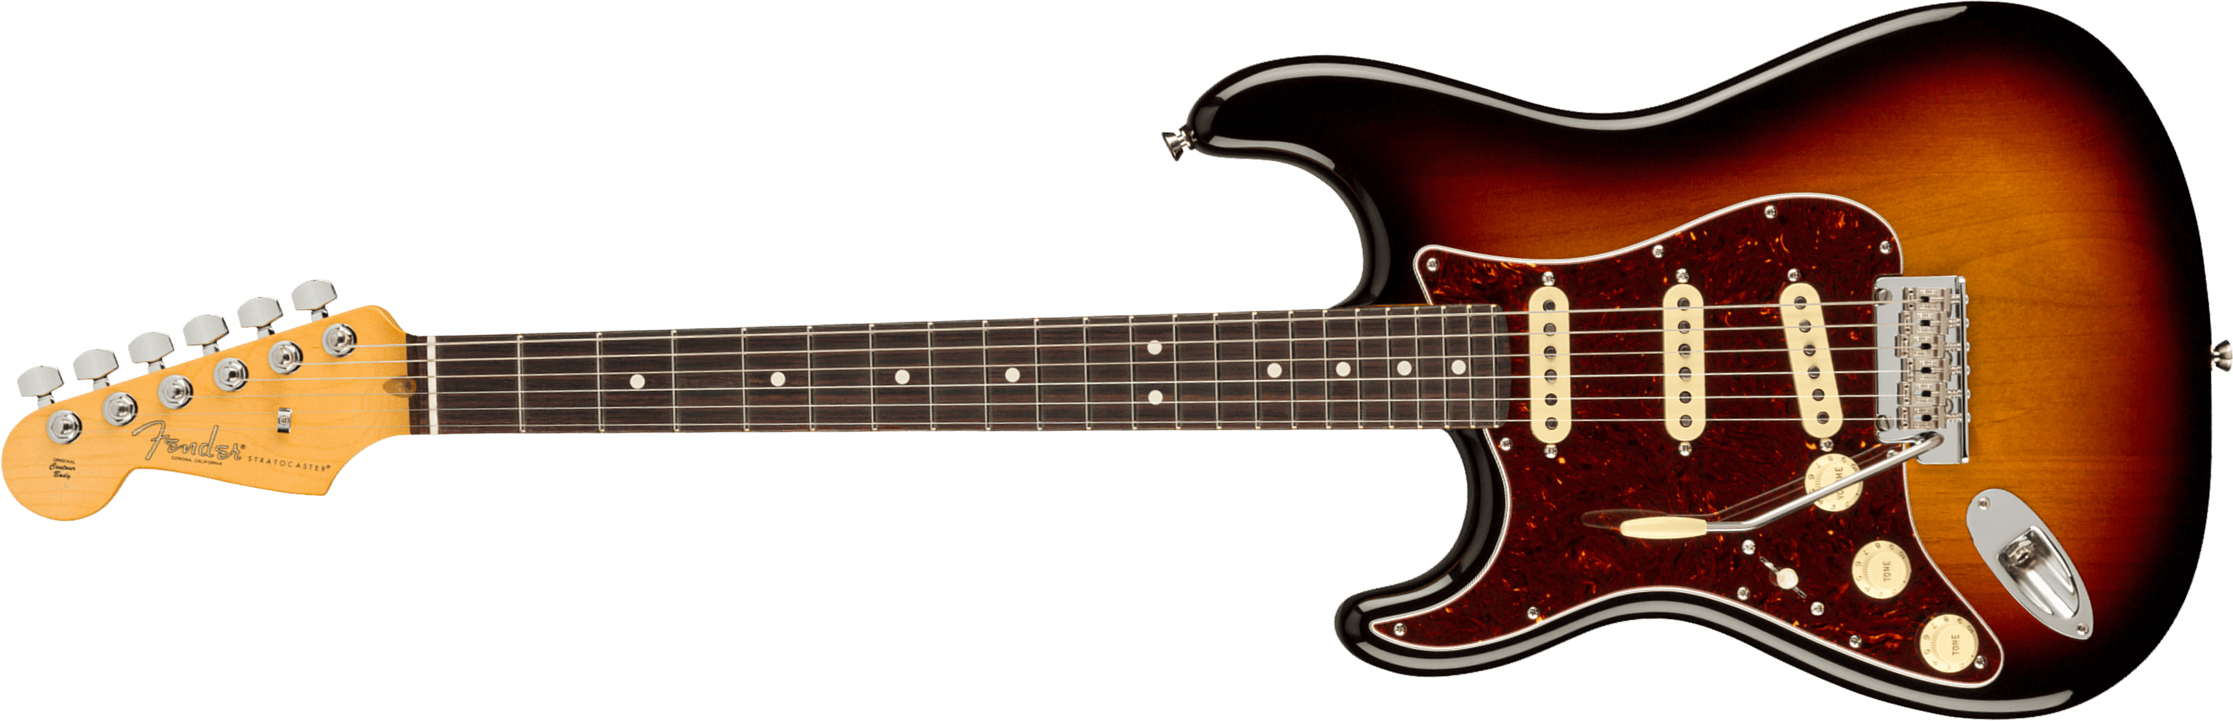 Fender Strat American Professional Ii Lh Gaucher Usa Rw - 3-color Sunburst - Left-handed electric guitar - Main picture